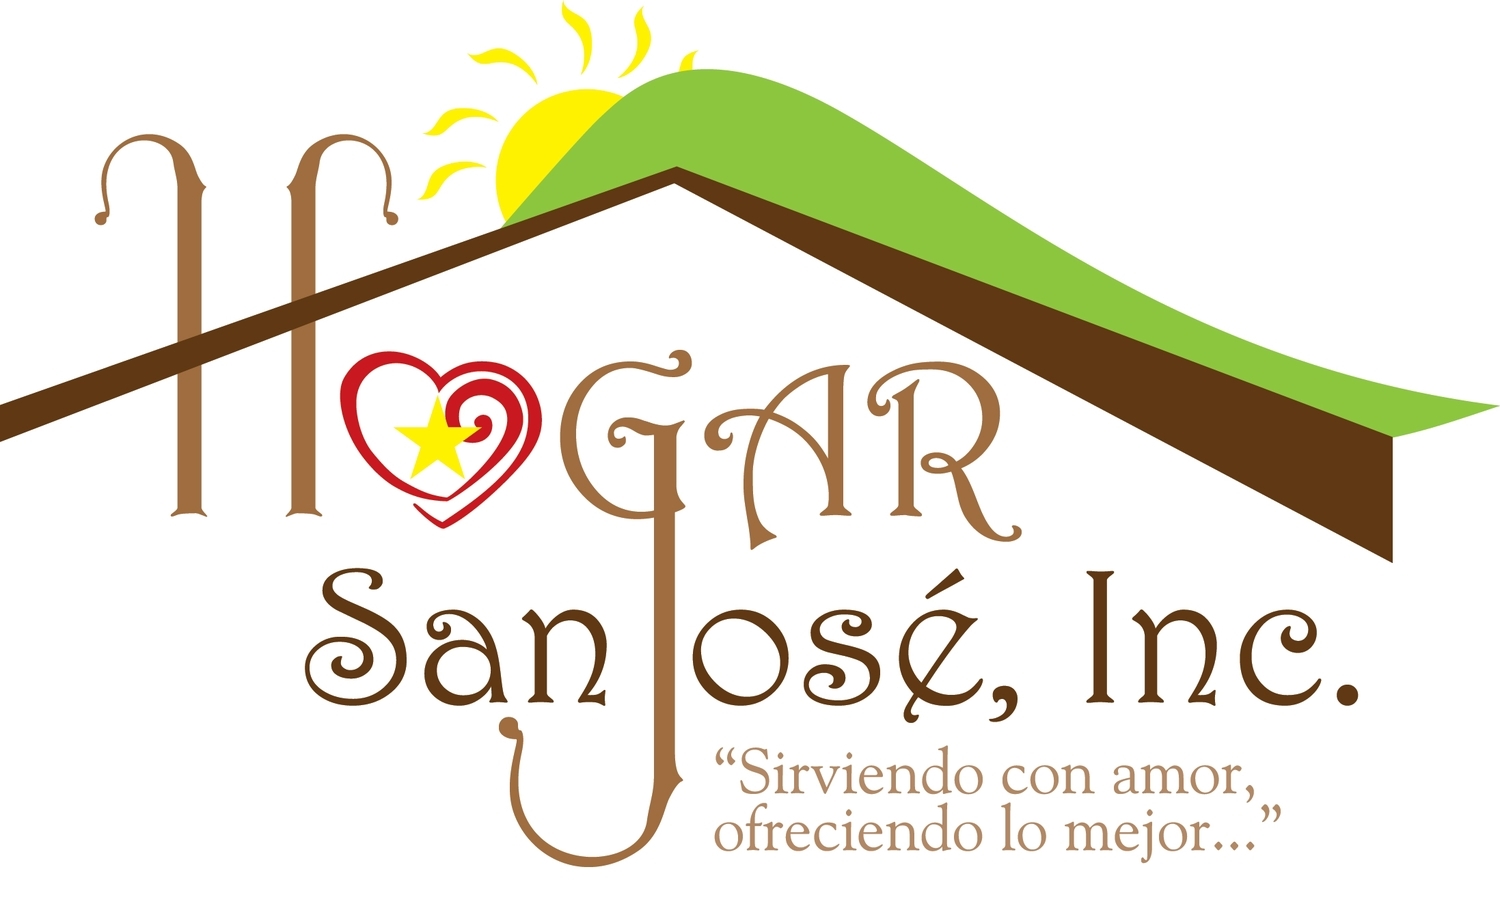 Hogar San José, Inc.